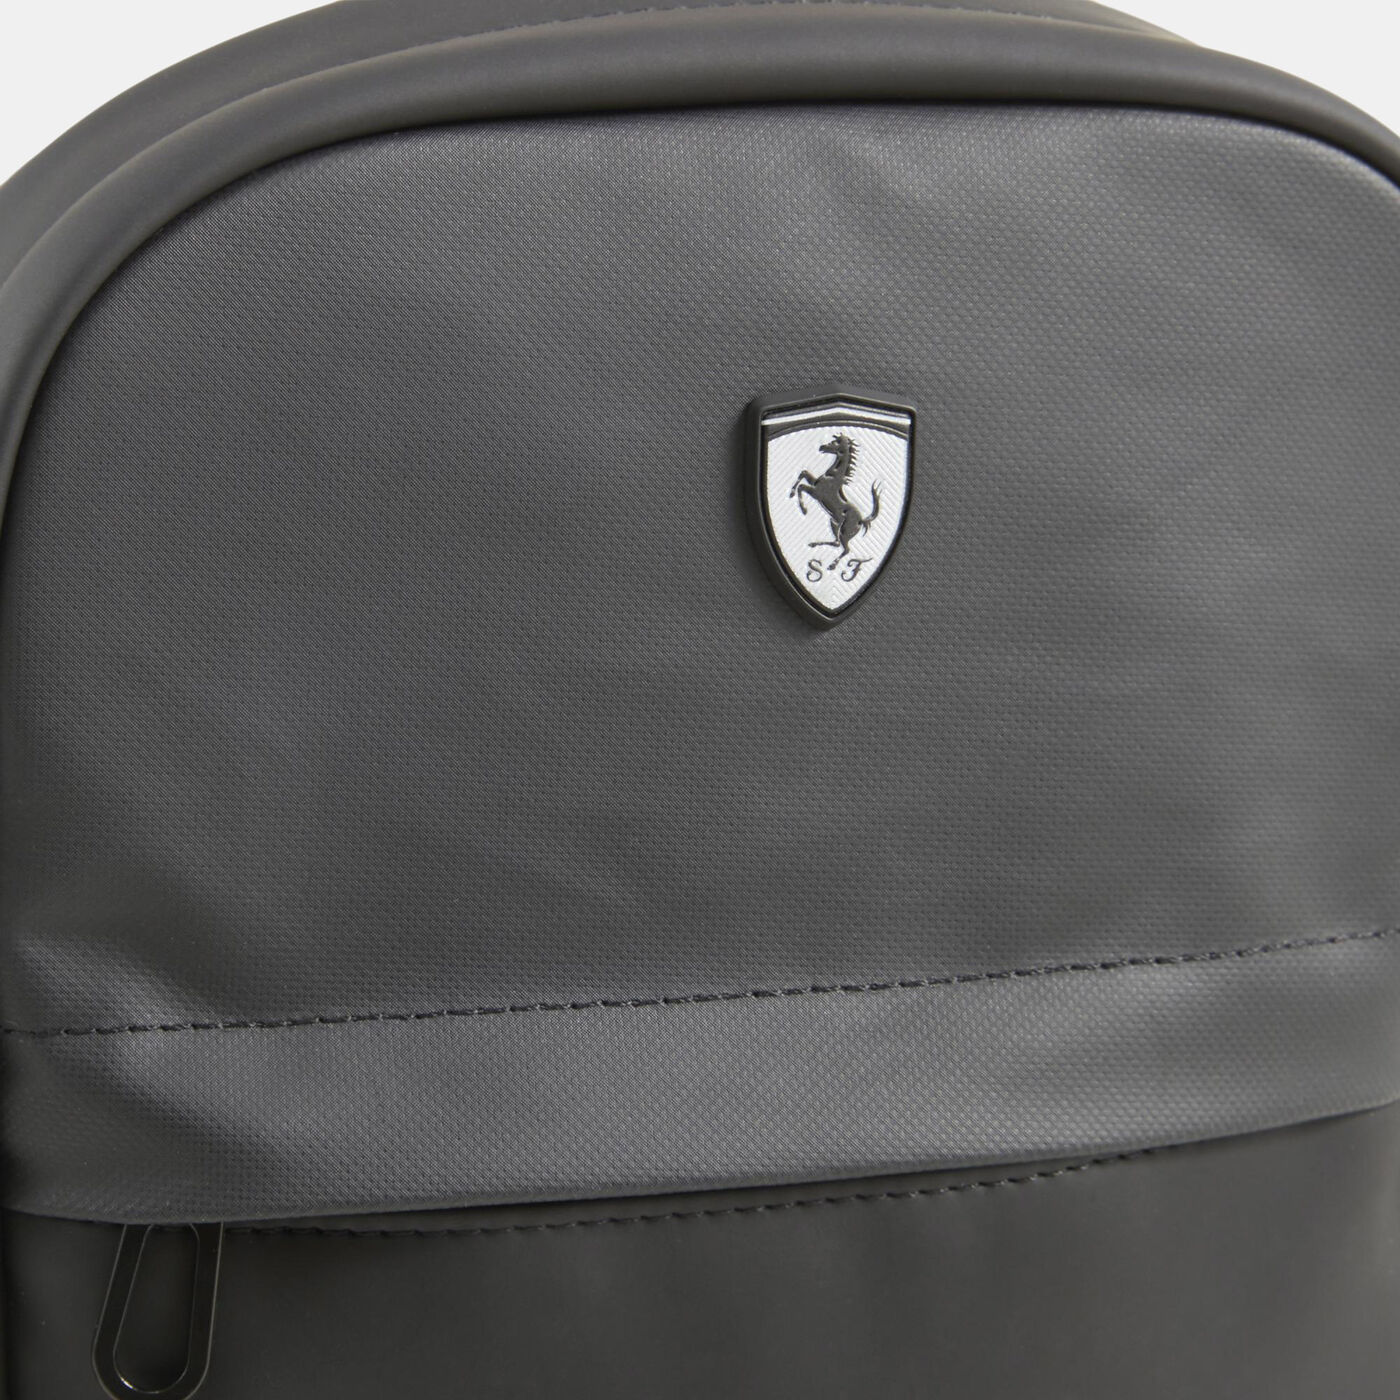 Ferrari SPTWR Style Portable Bag